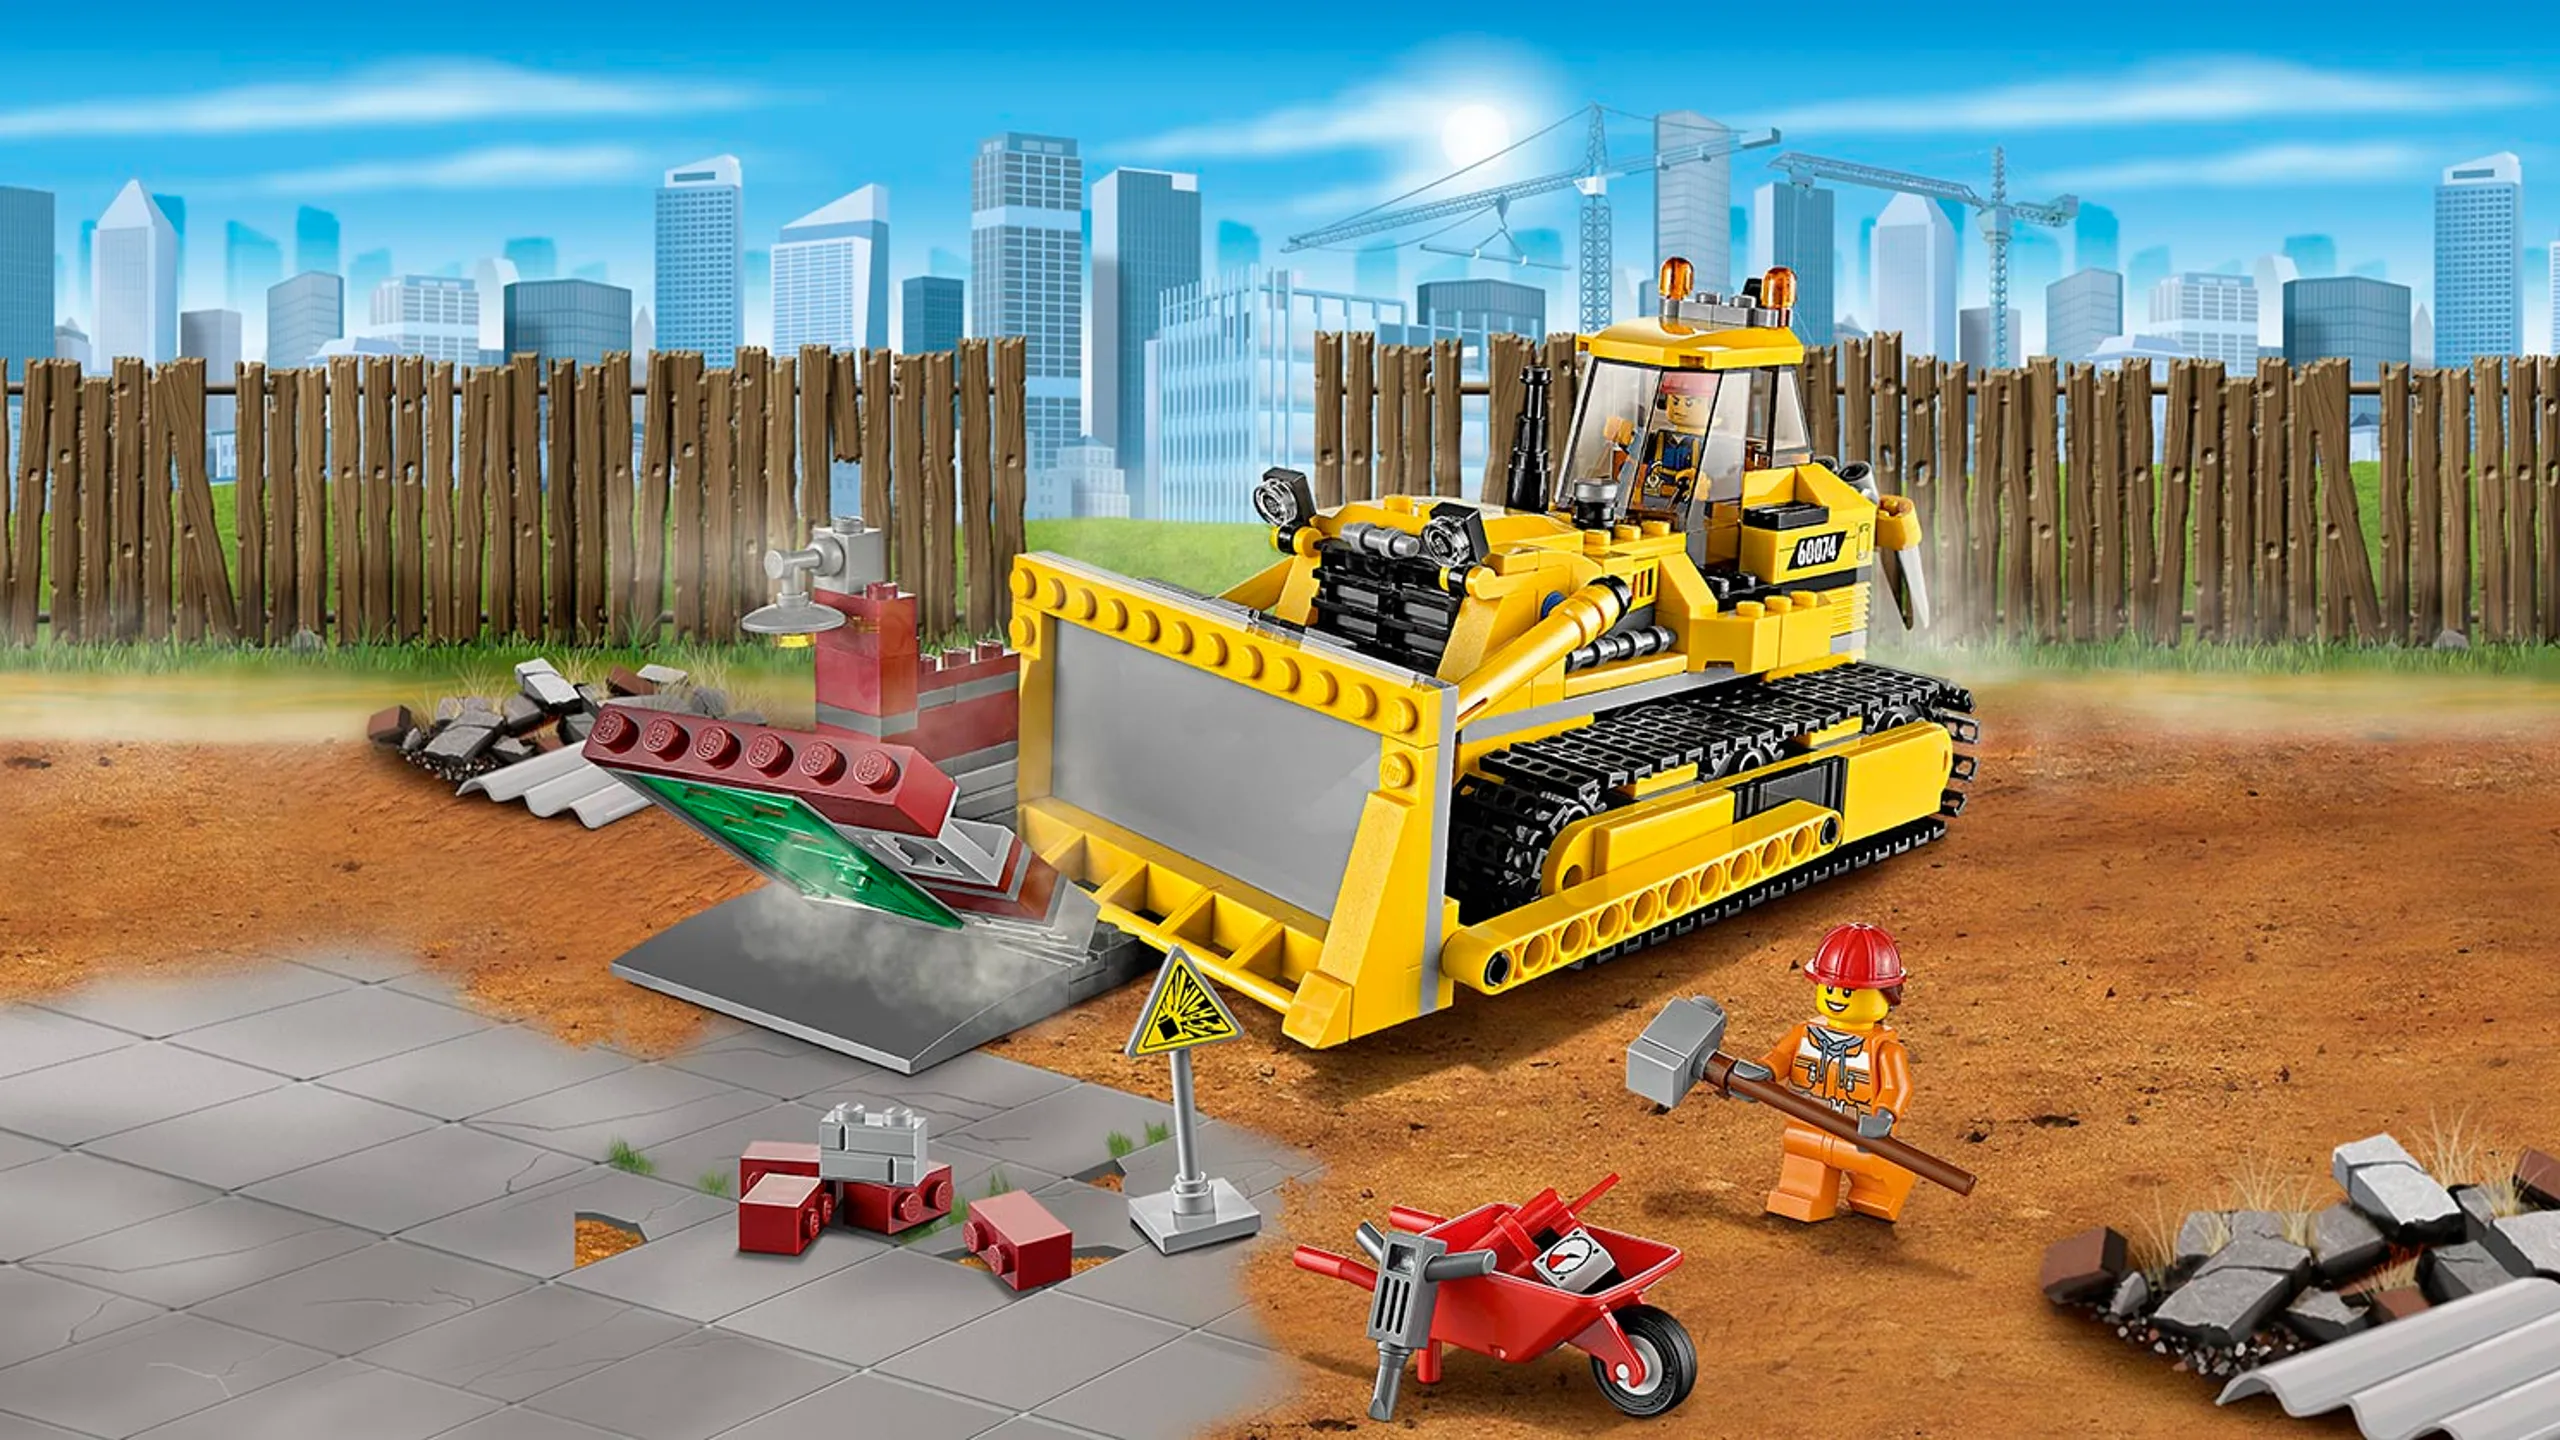 LEGO City Demolition site vehicles and minifigures - Bulldozer 60074